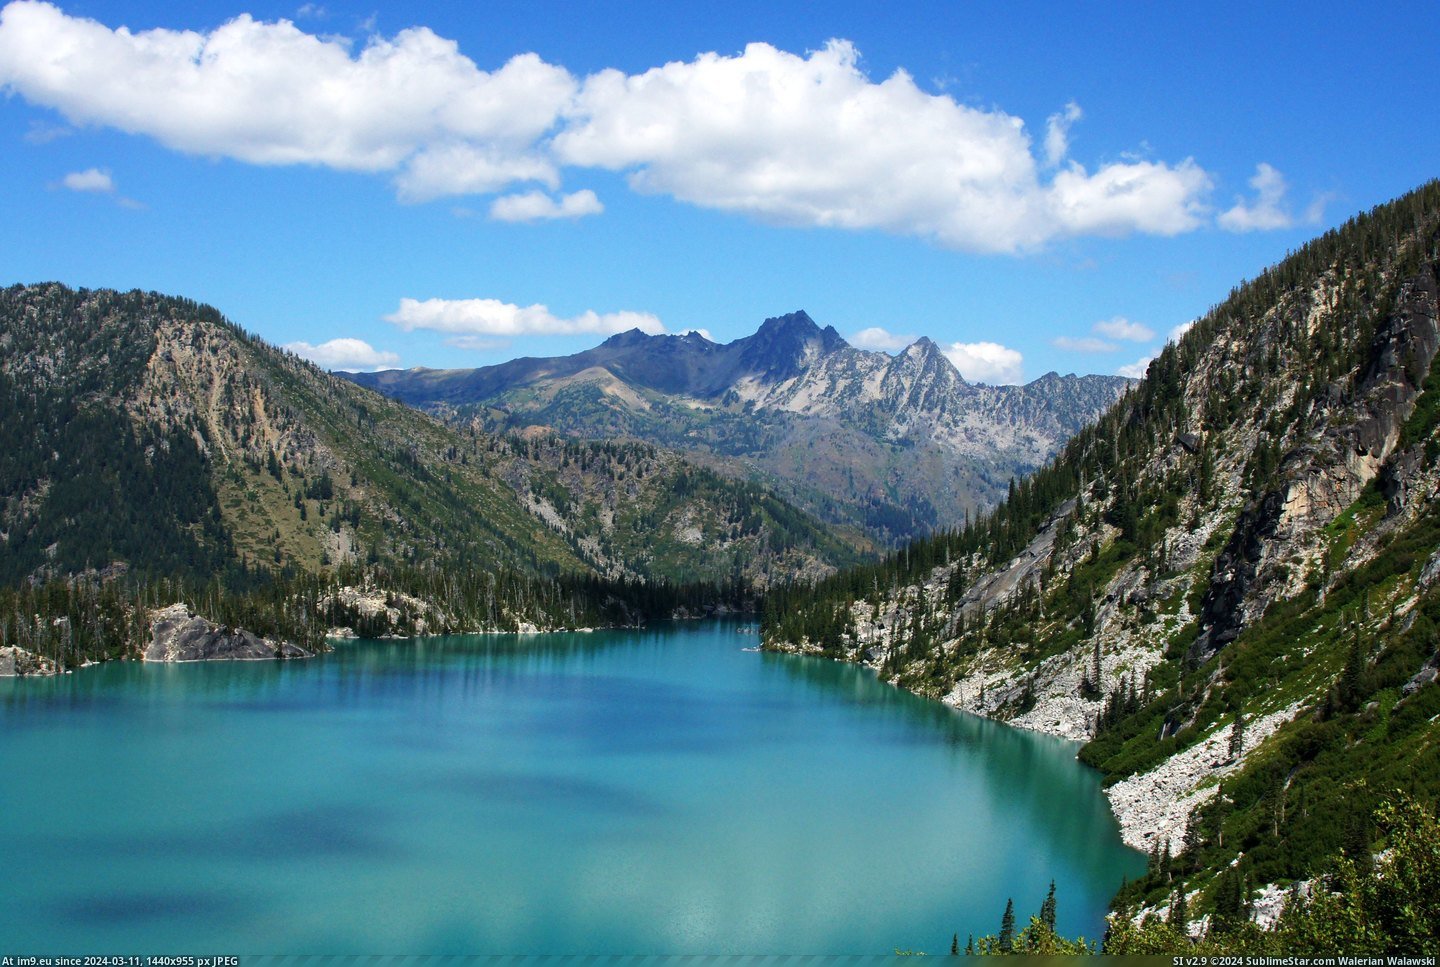 #Lake #Washington #Leavenworth #Colchuck #Waters #Turquoise [Earthporn] The turquoise waters of Colchuck Lake, near Leavenworth Washington [4592x3056] [oc] Pic. (Image of album My r/EARTHPORN favs))